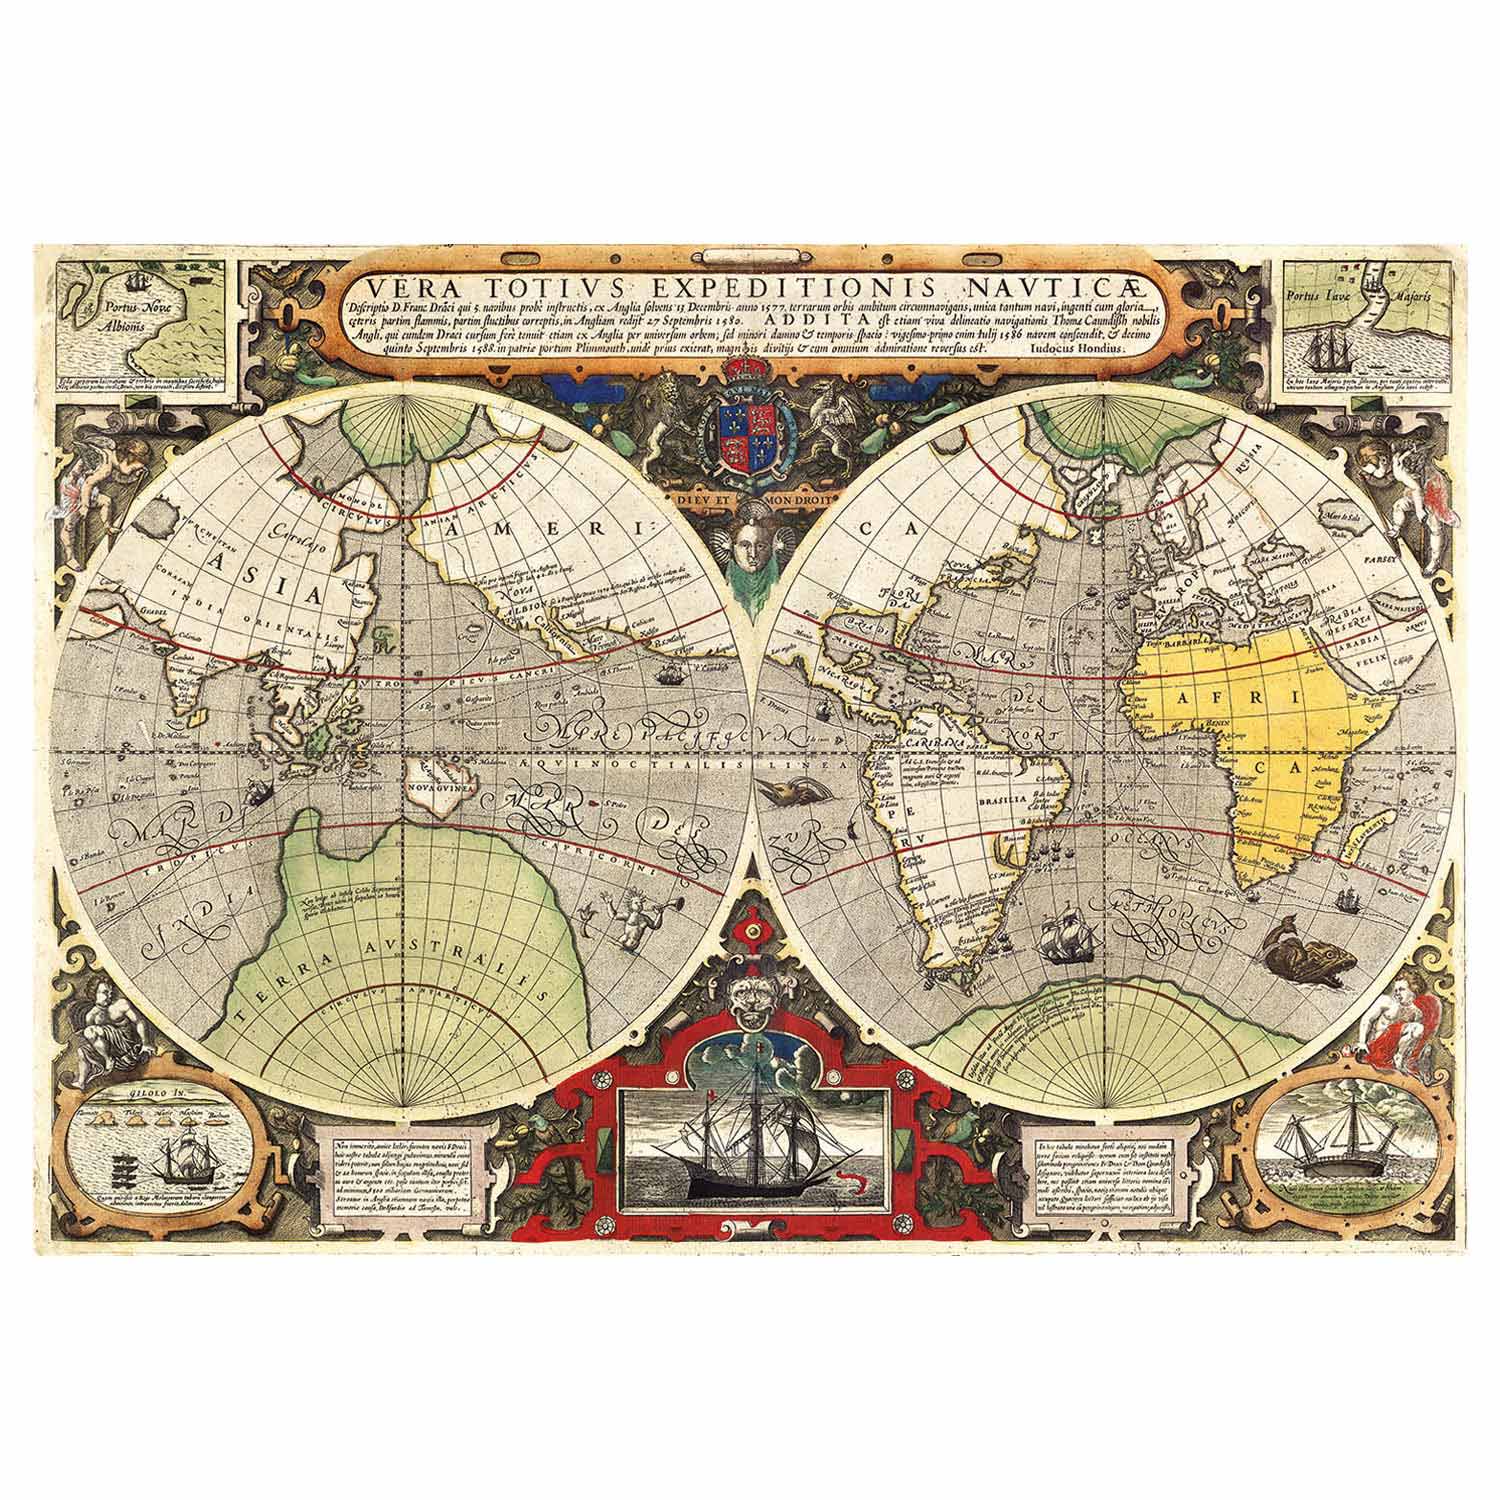 Clementoni Puzzle Nautische Weltkarte, 6000 Teile.